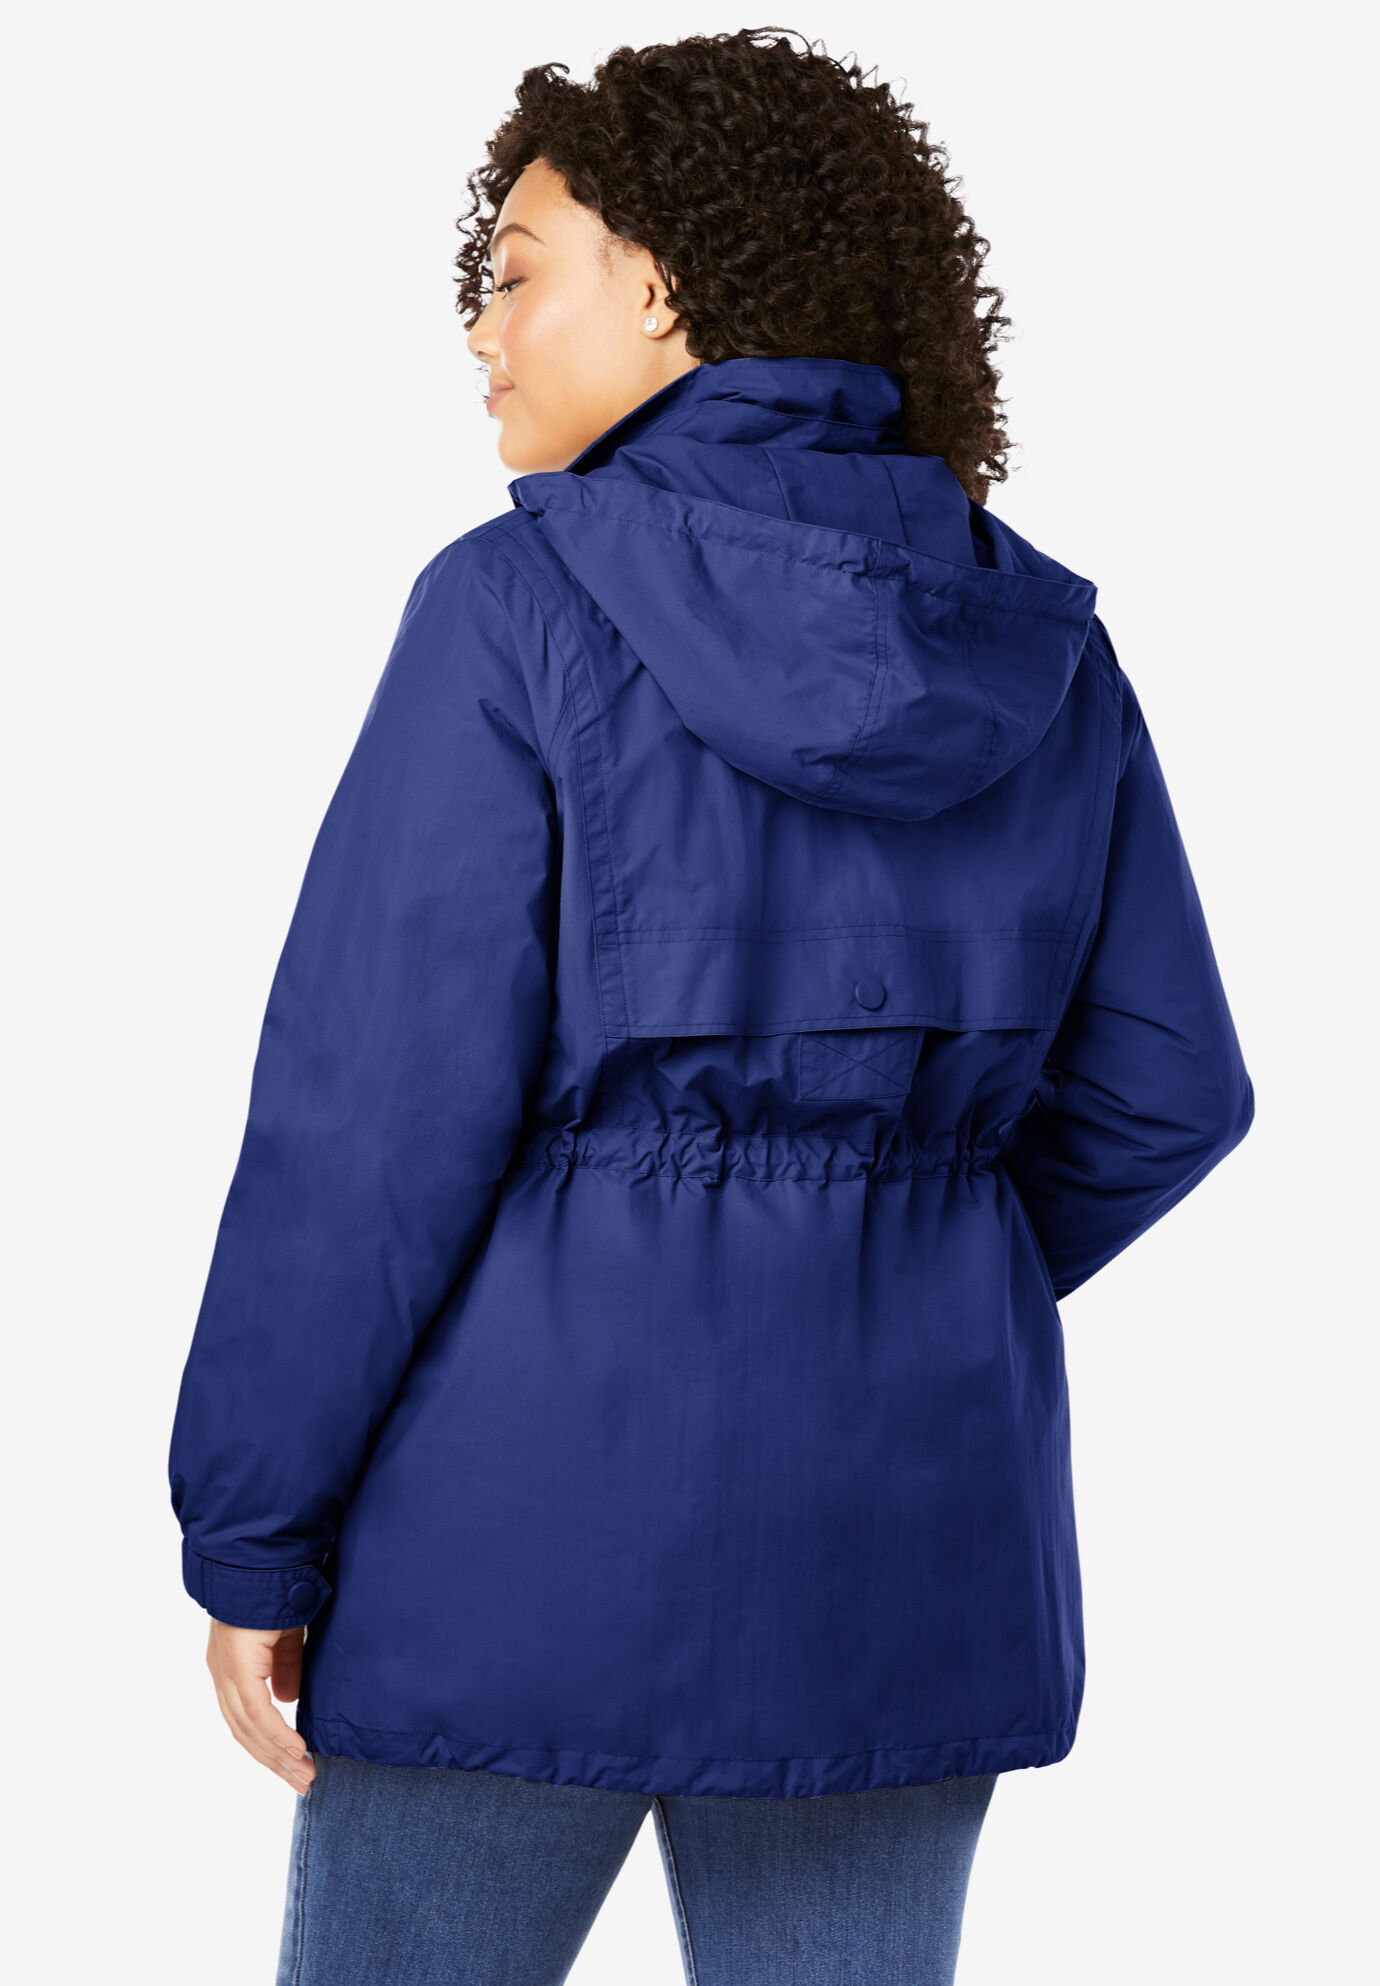 MISSY New Plain Jacket Plus Size RAIN MAC Ladies Parka Womens Festival Raincoat Size 8-24 Plain 